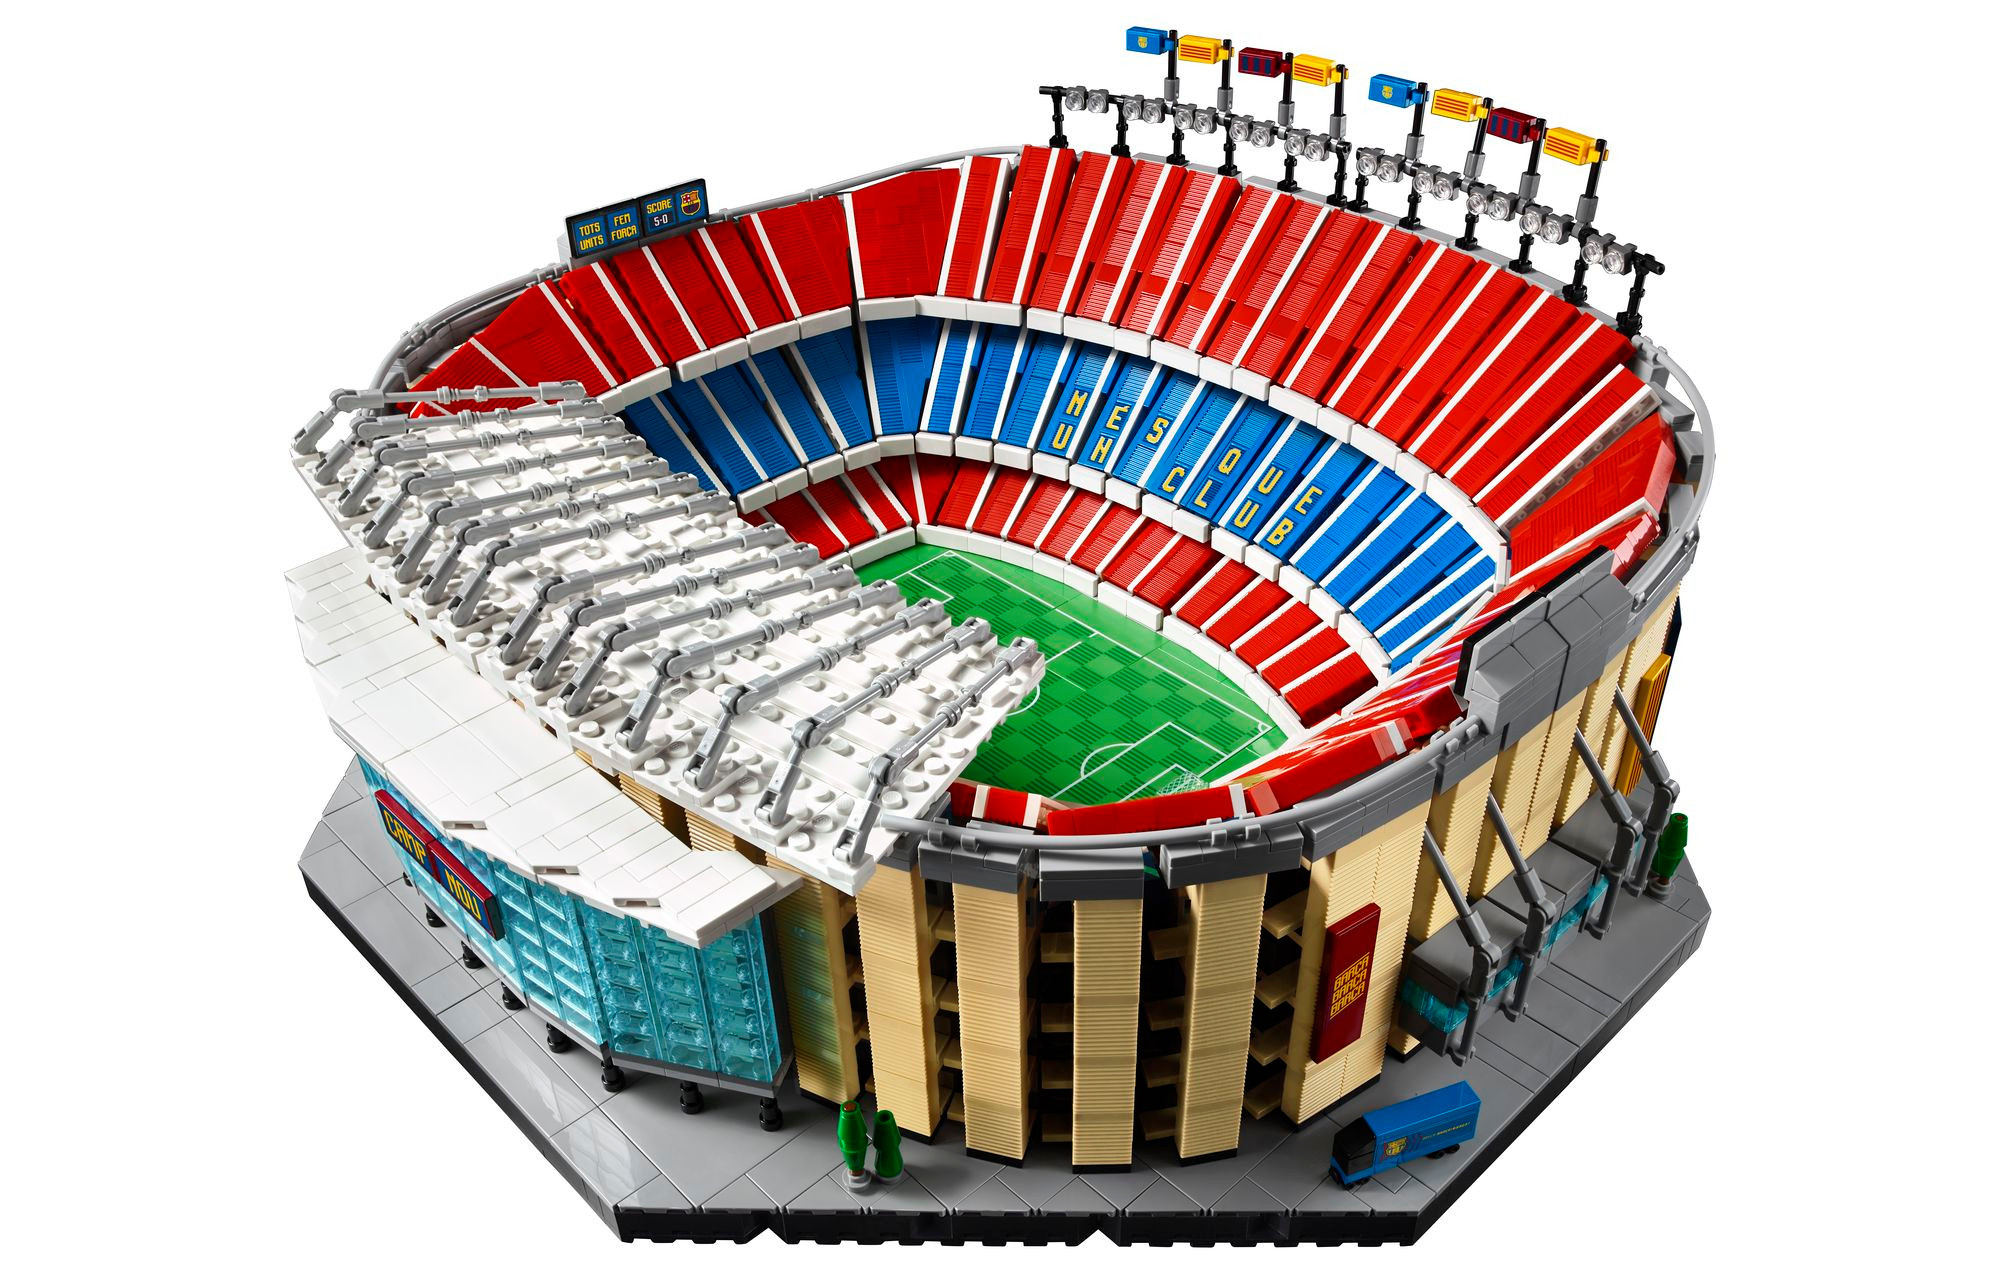 Win a Lego Camp Nou Barcelona stadium set and your own custom minifigure